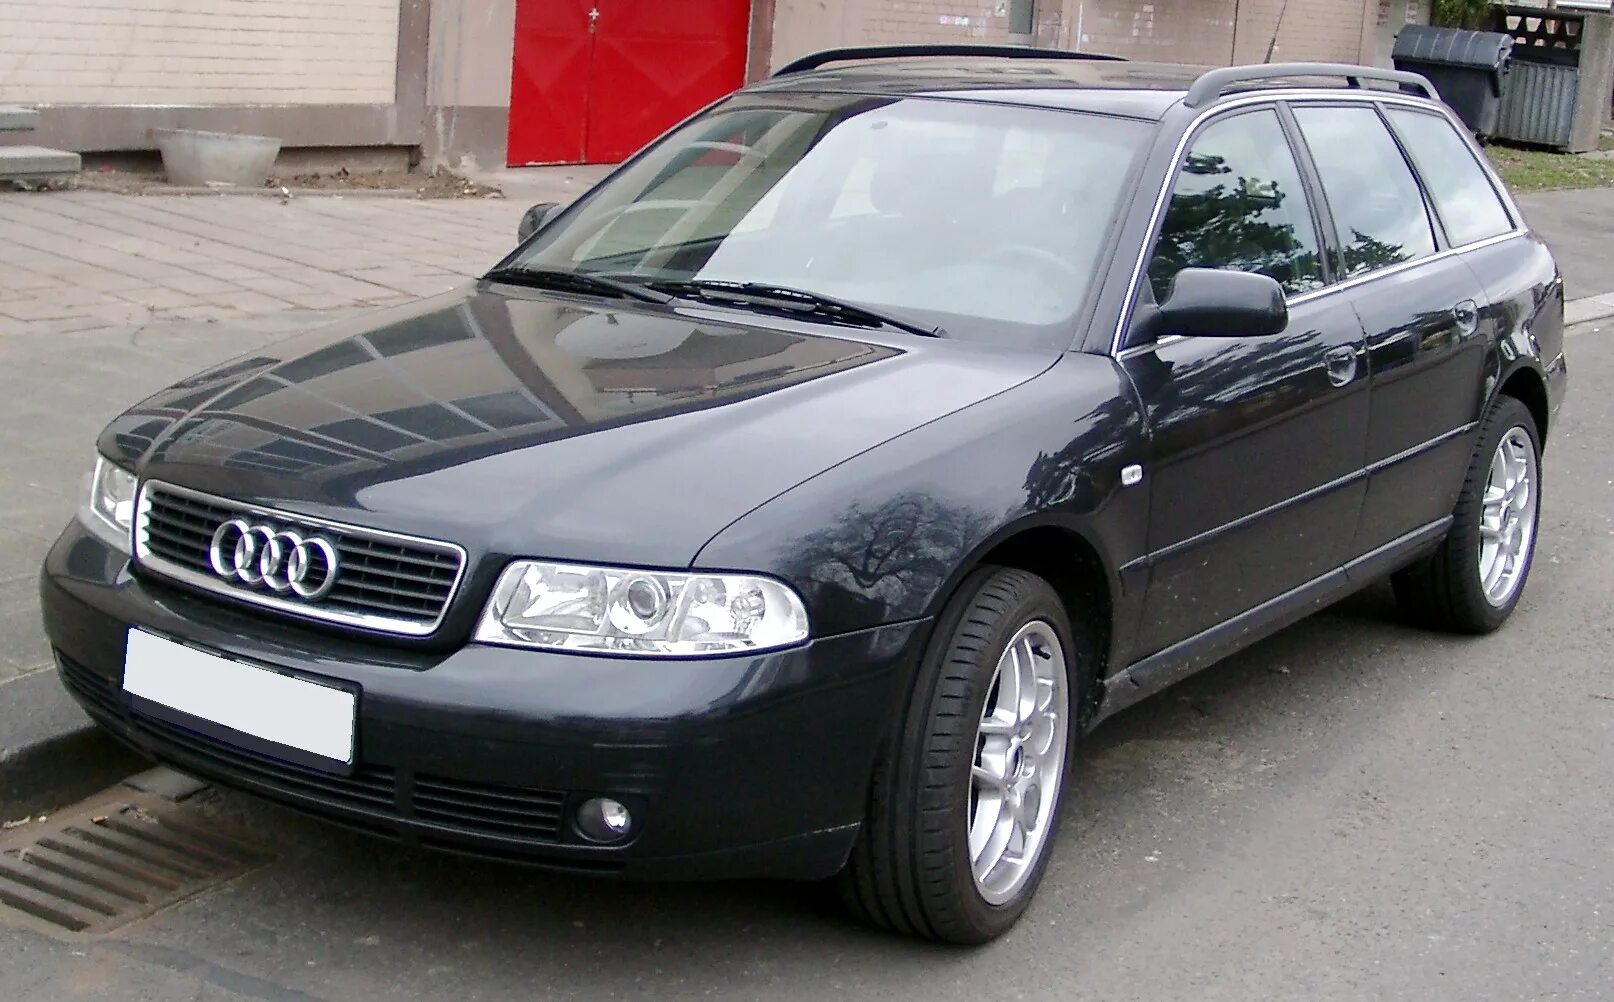 Audi a4 универсал 2000. Audi a4 b5 1999. Ауди а4 универсал 1999. Ауди а4 2000 года универсал. Купить бу ауди а4 авито